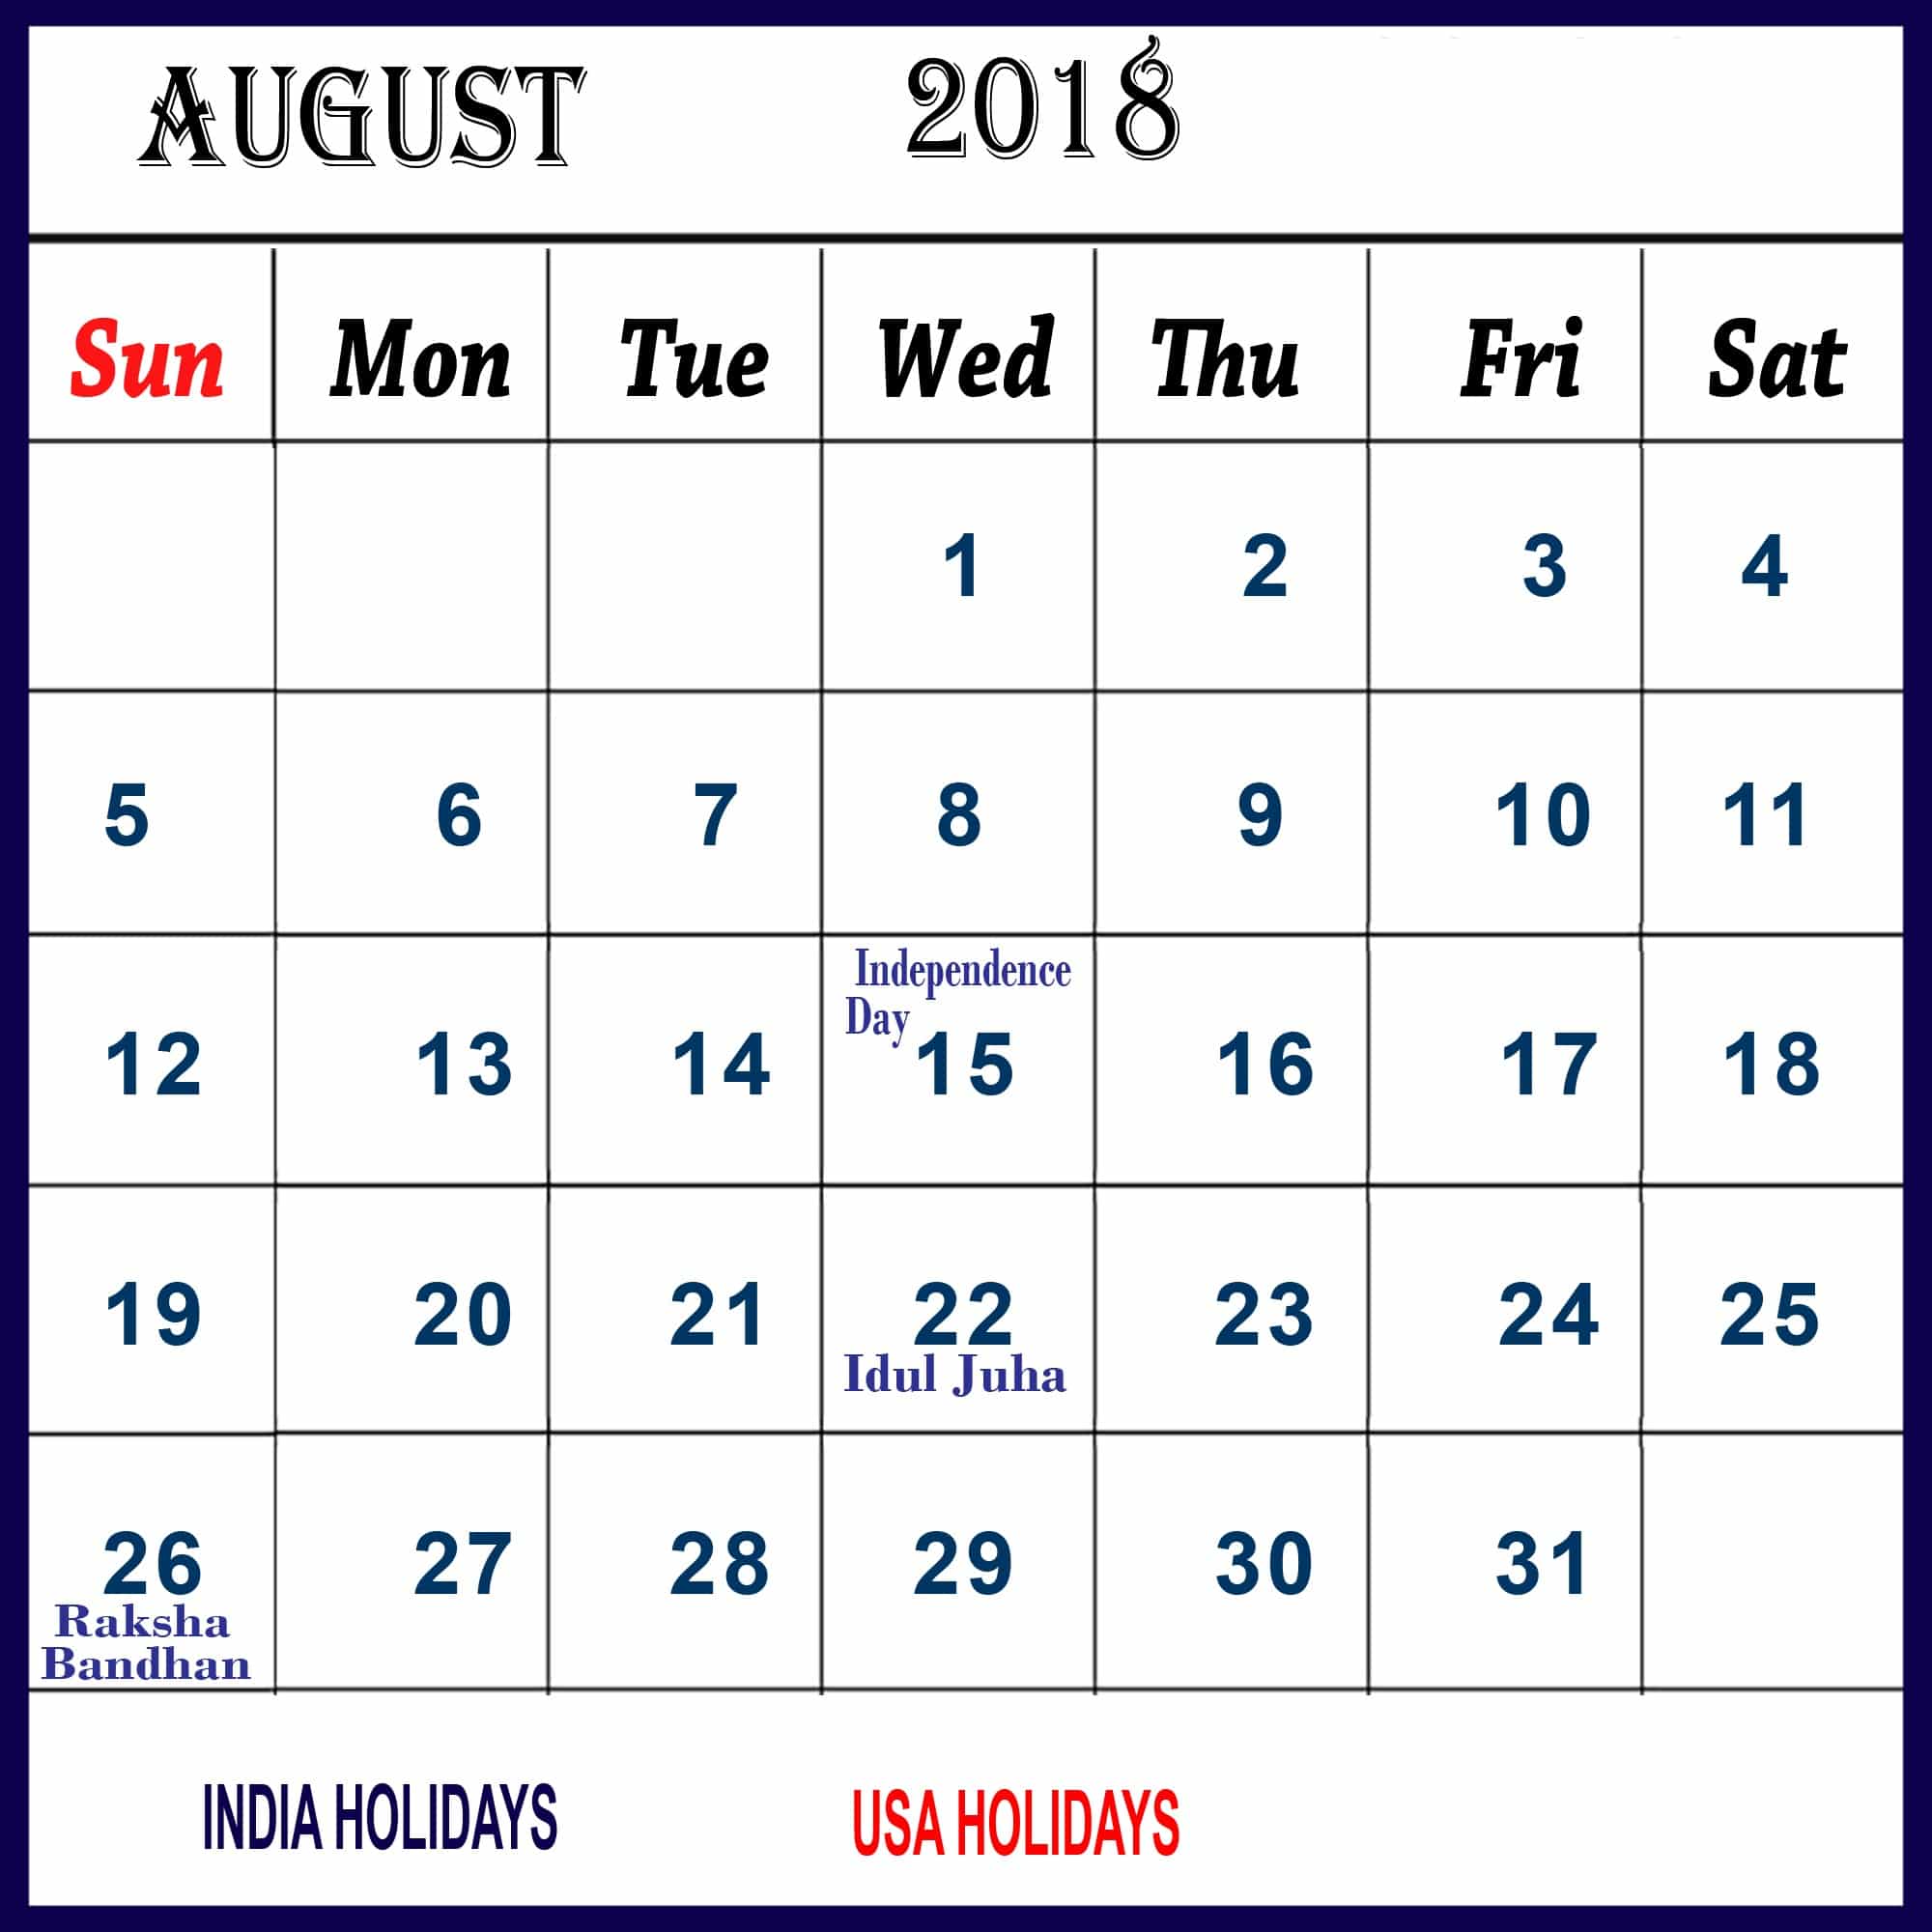 August 2018 Calendar India